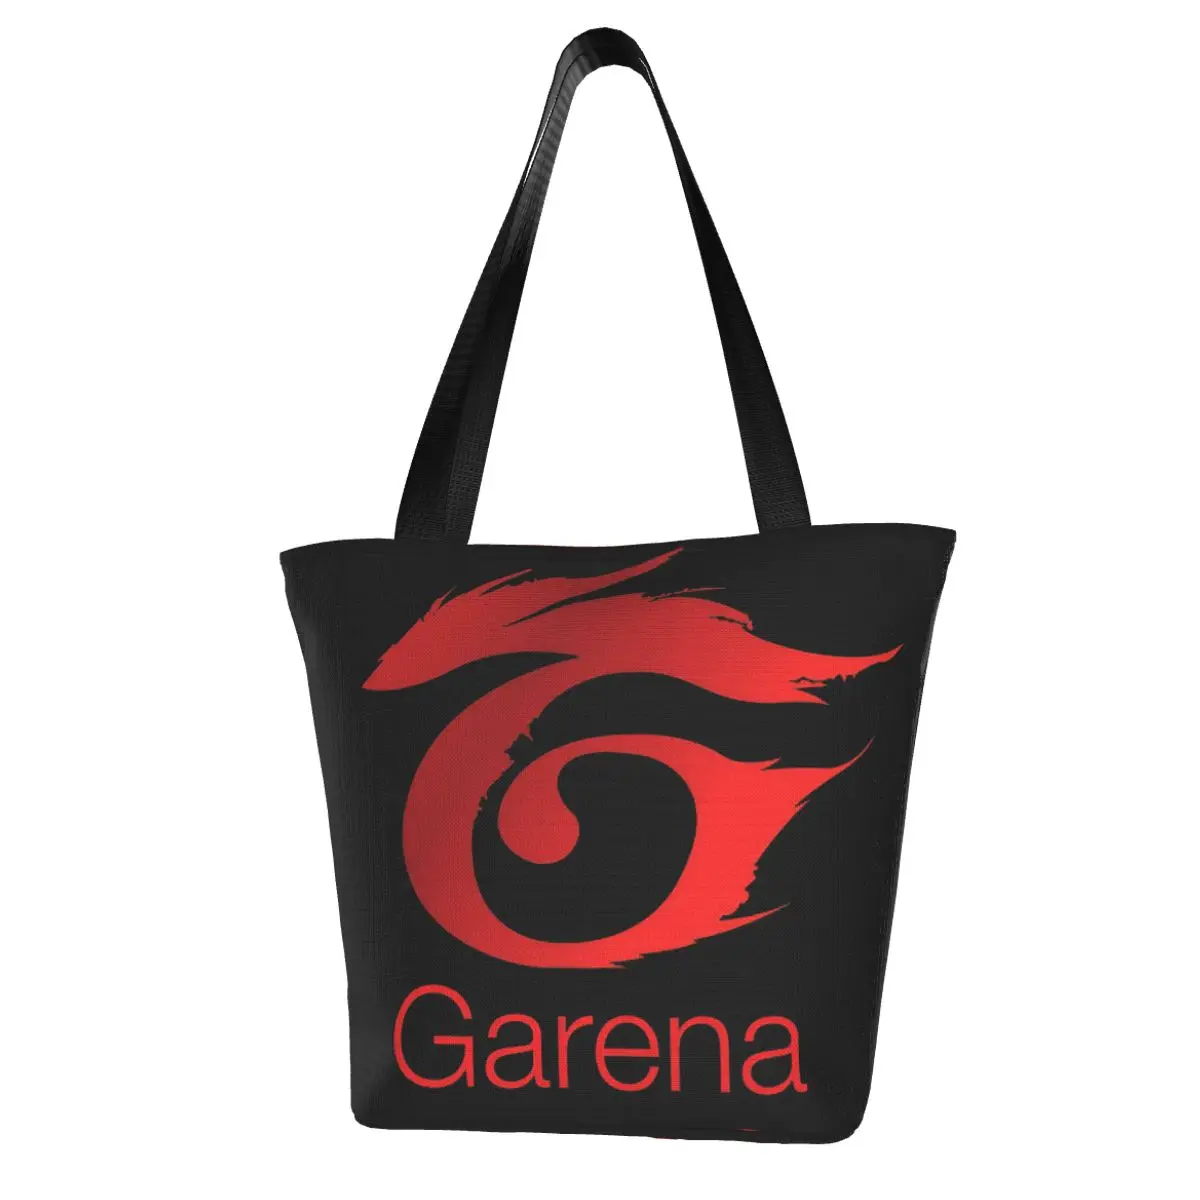 Free Fire Garena Shopping Bag Aesthetic Cloth Outdoor Handbag Female Fashion Bags